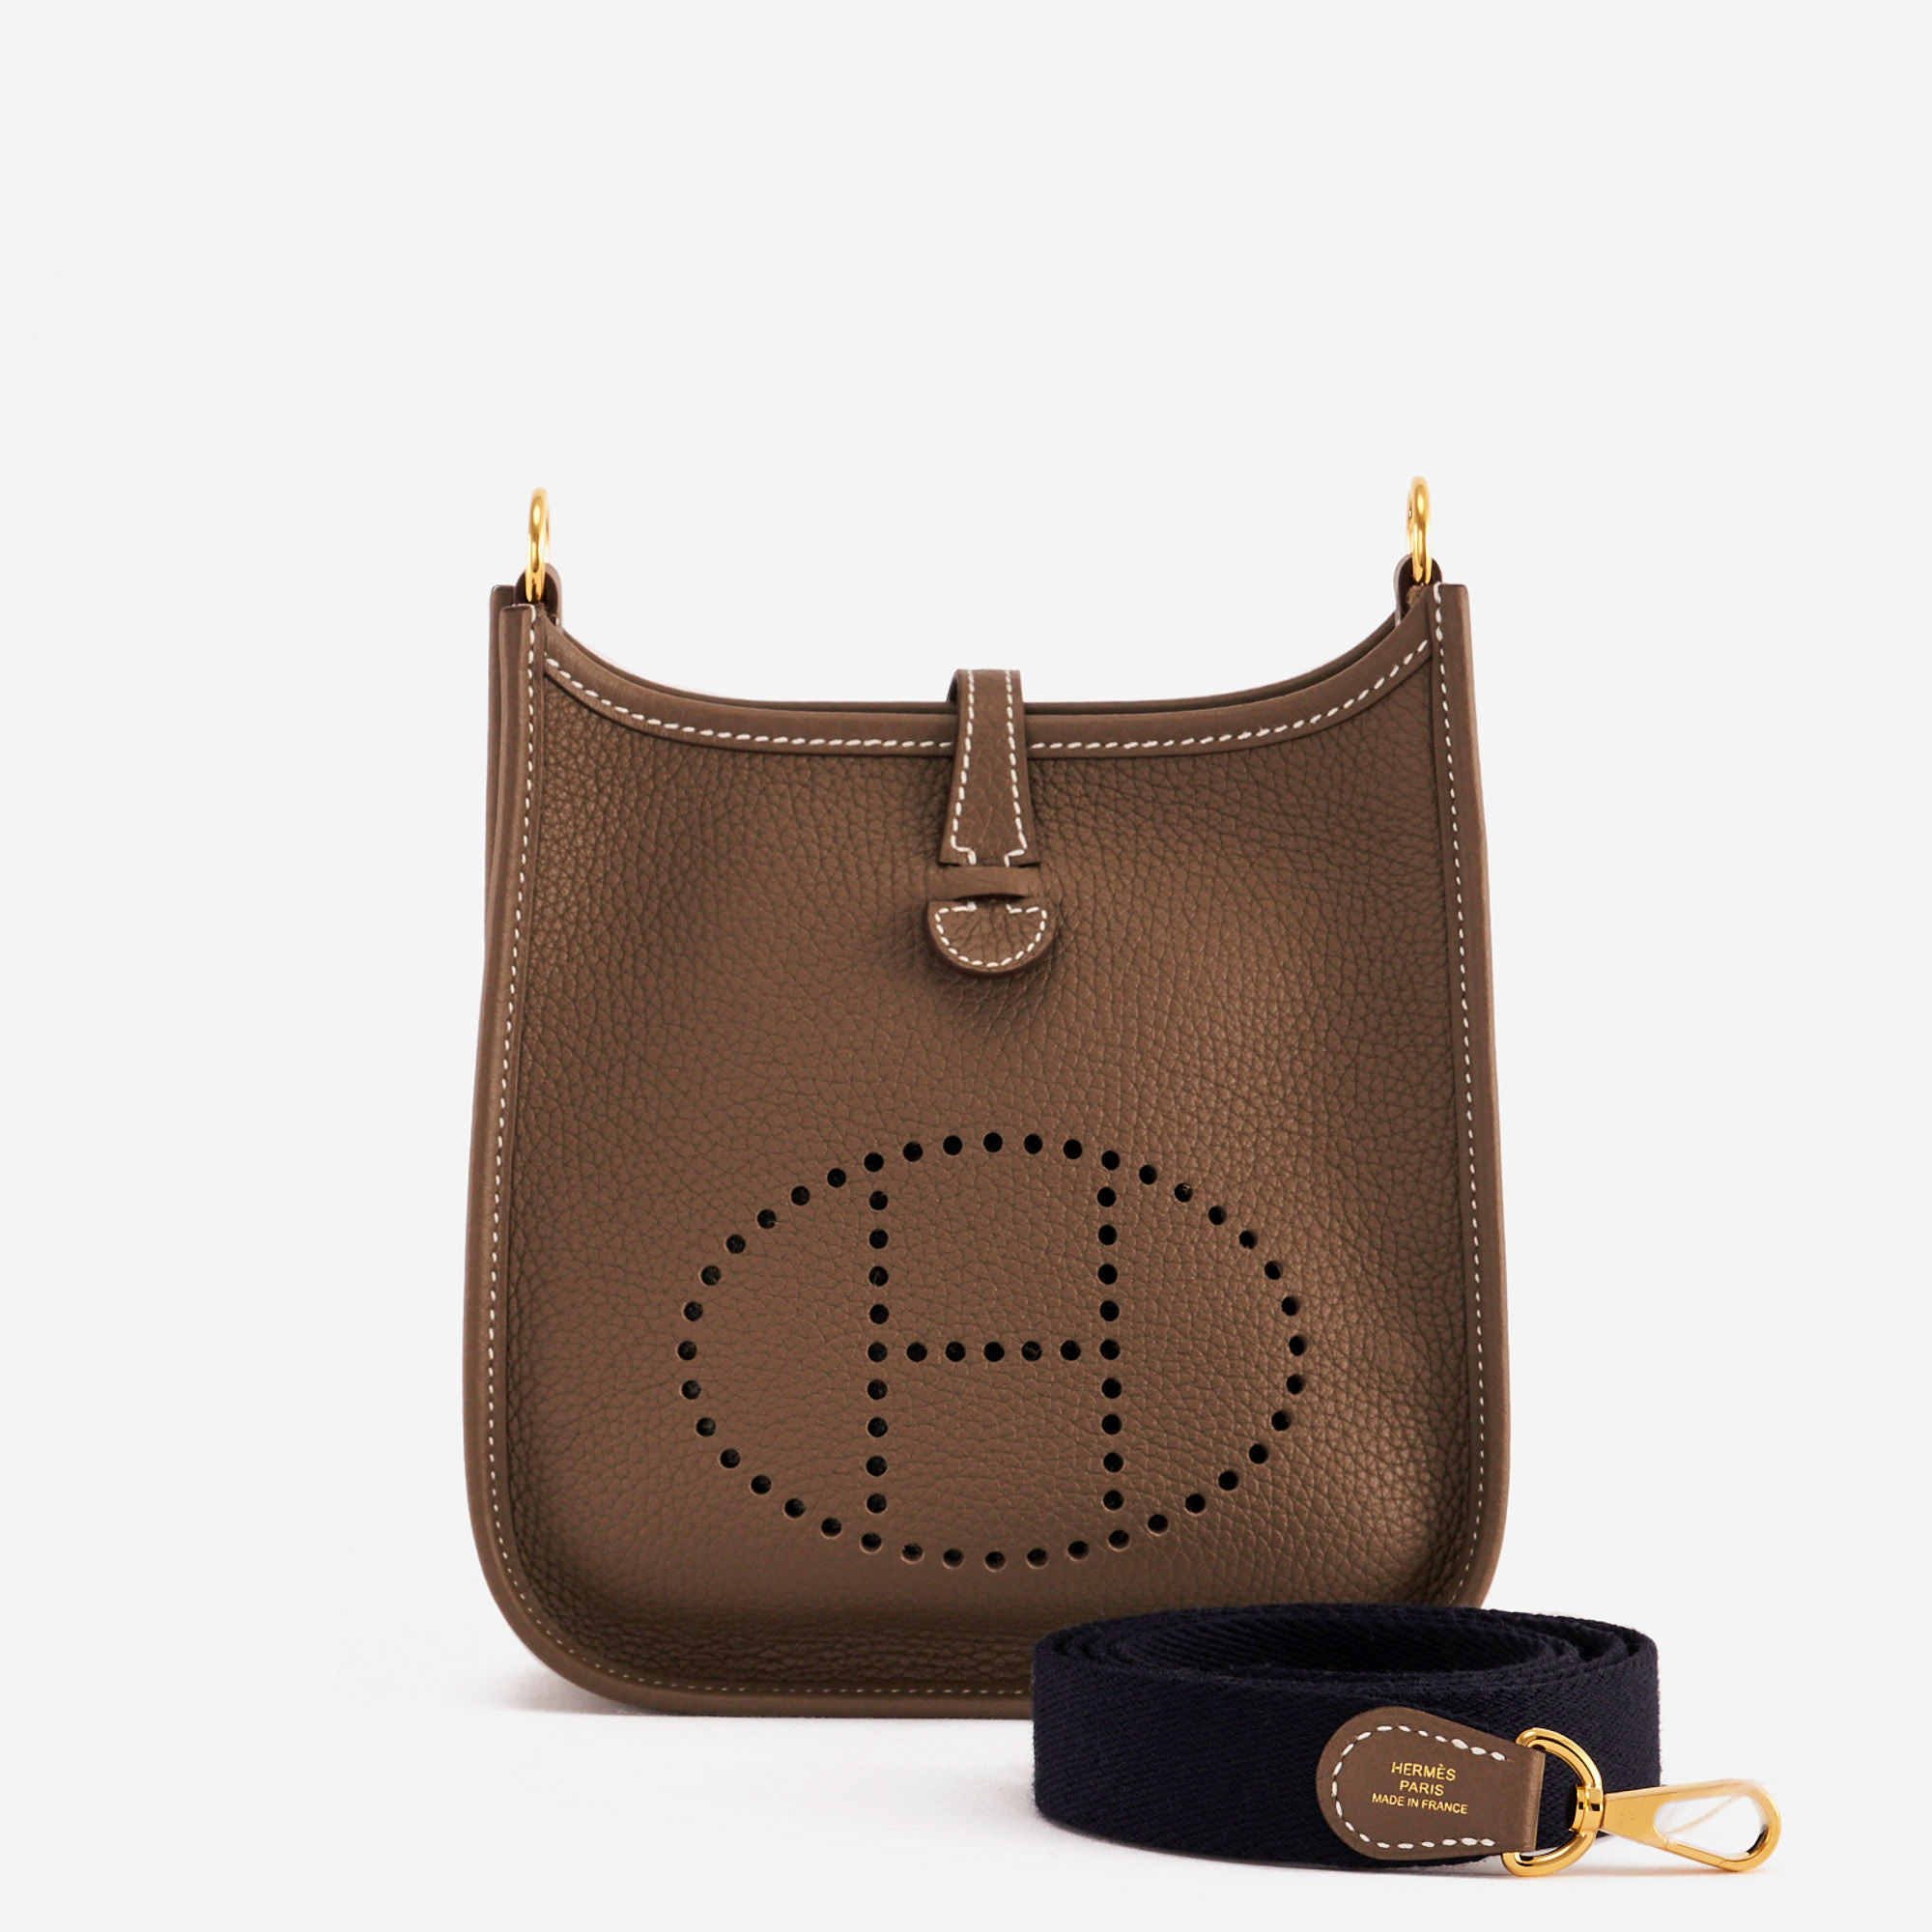 Pre-owned Hermès bag Evelyne 16 Amazone Etoupe / Bleu Indigo Brown | Sell your designer bag on Saclab.com